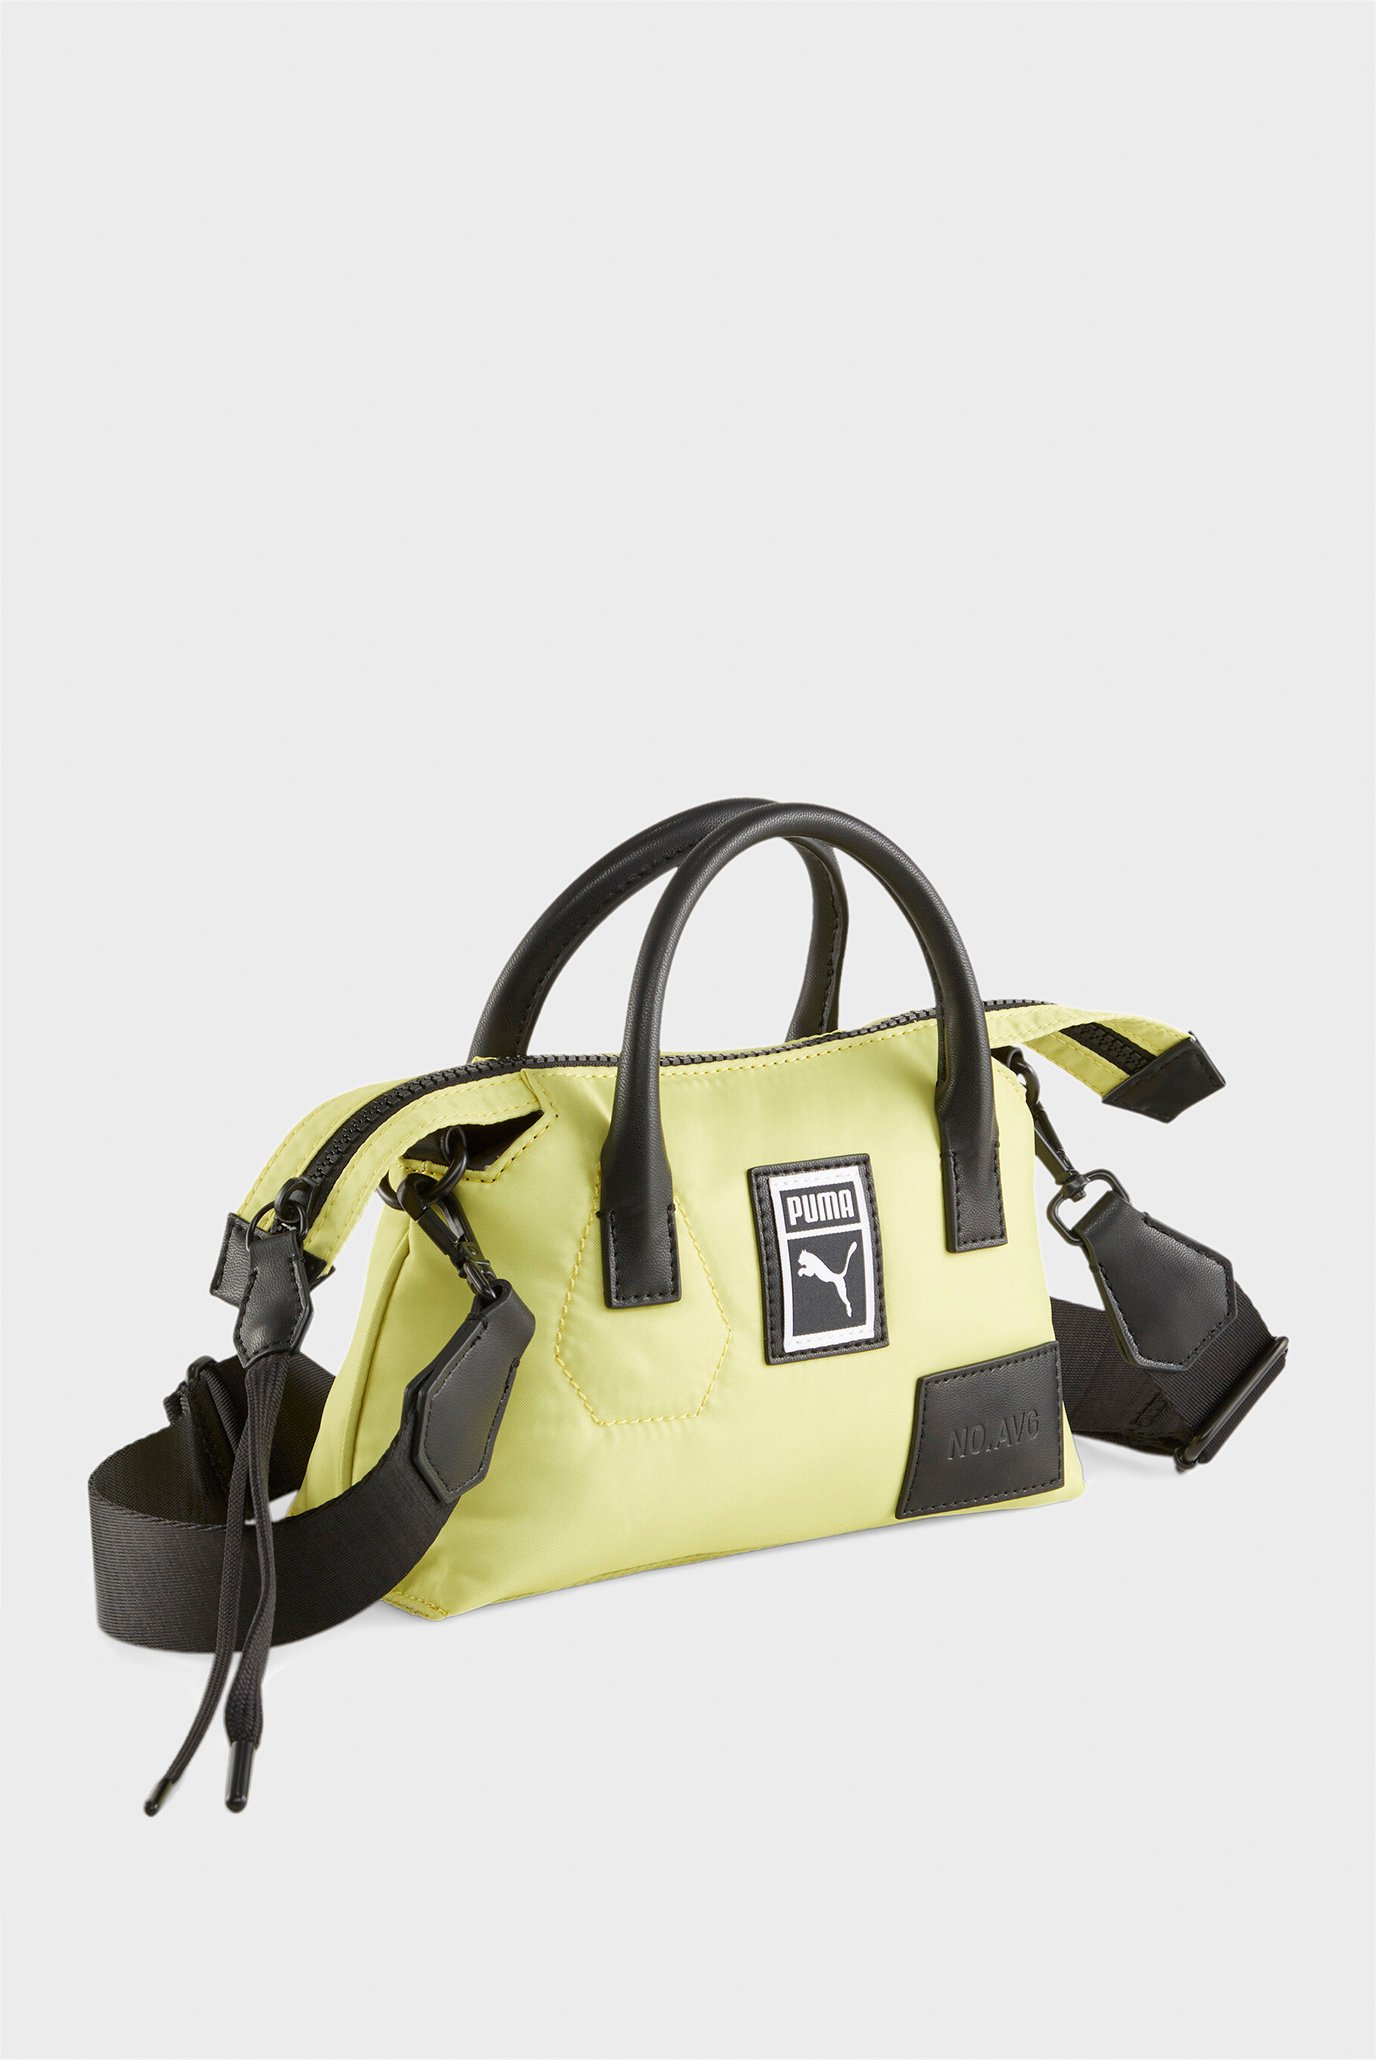 Жовта сумка NO.AVG Mini Grip Bag жовта 1